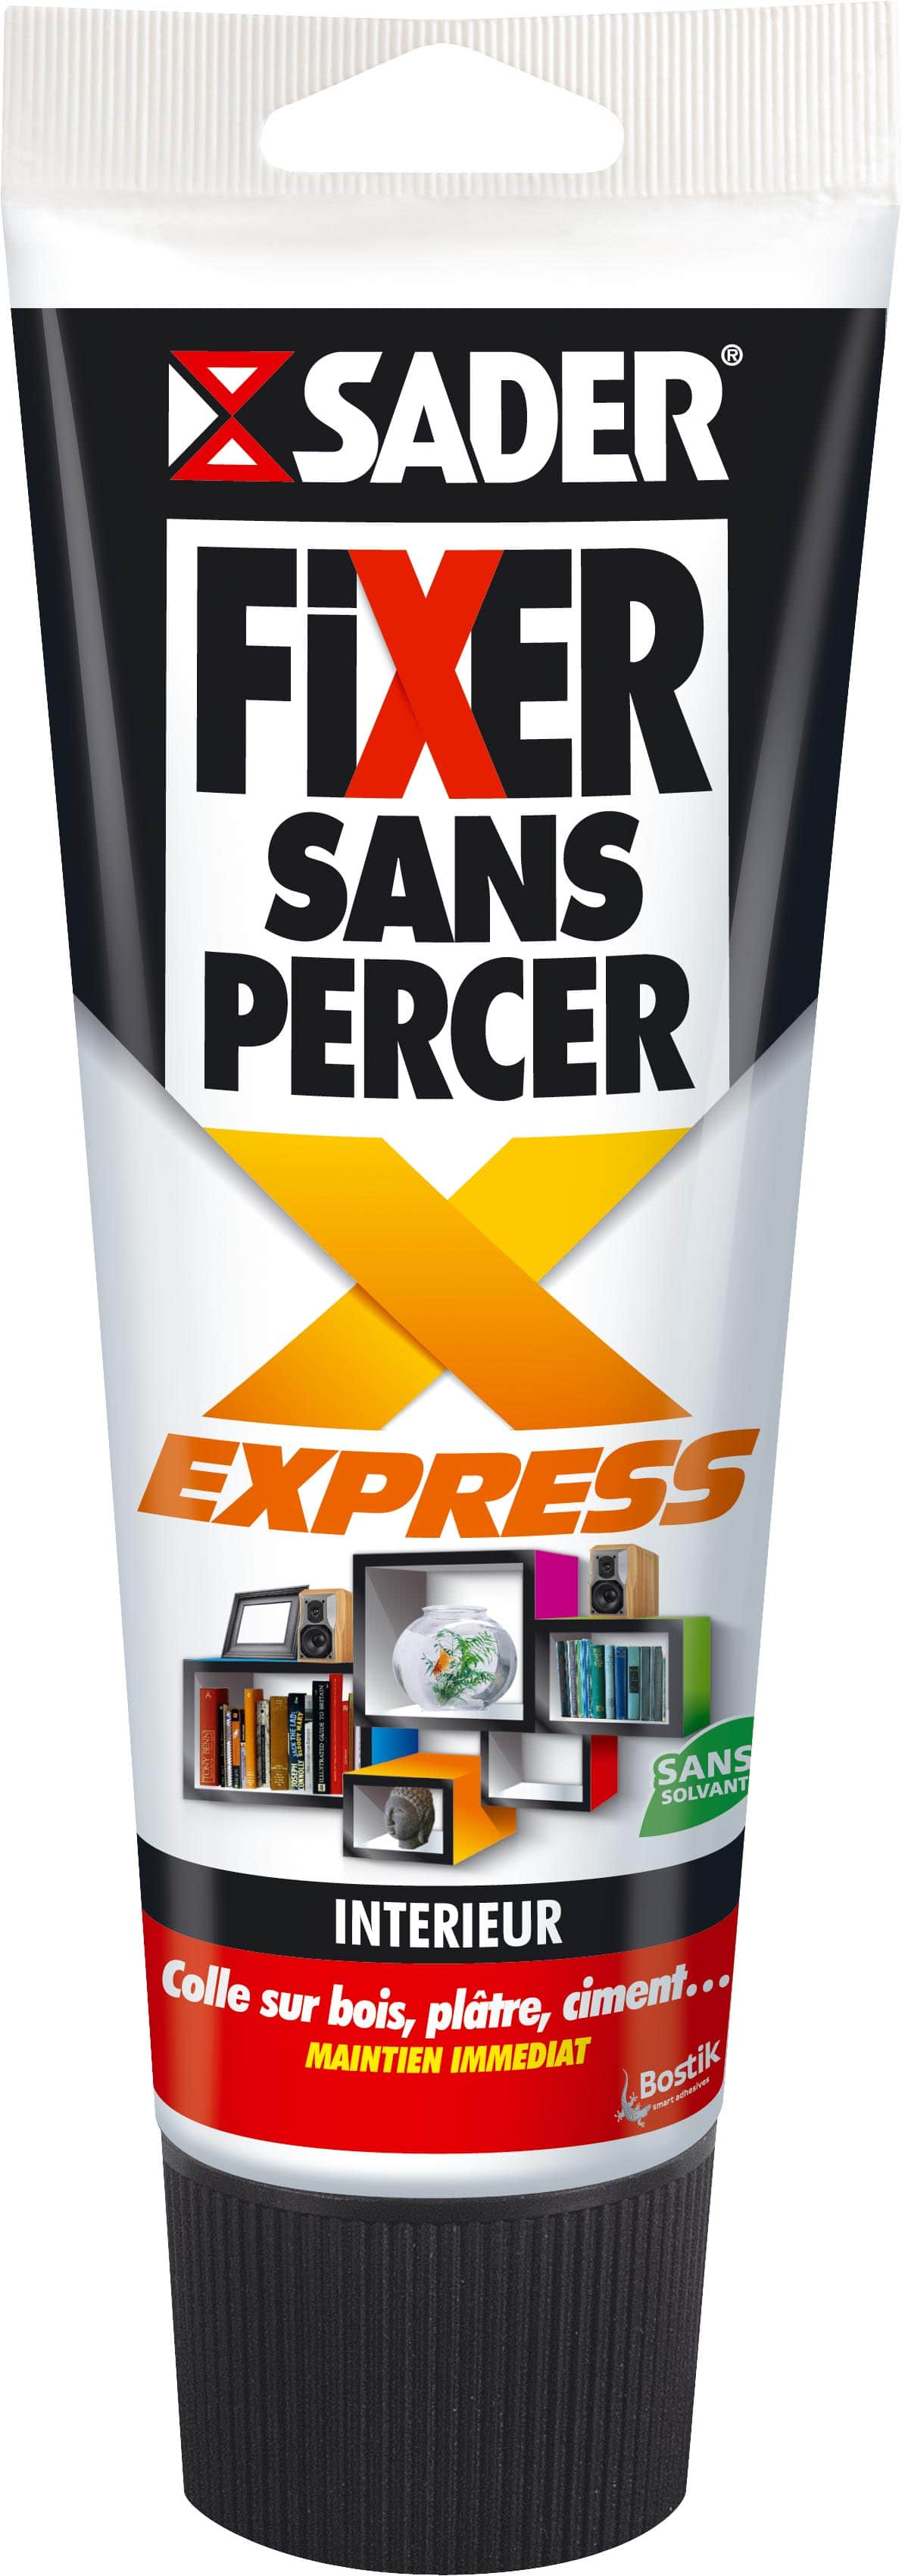 Colle Fixer sans percer express tube 200ml - SADER - Mr.Bricolage